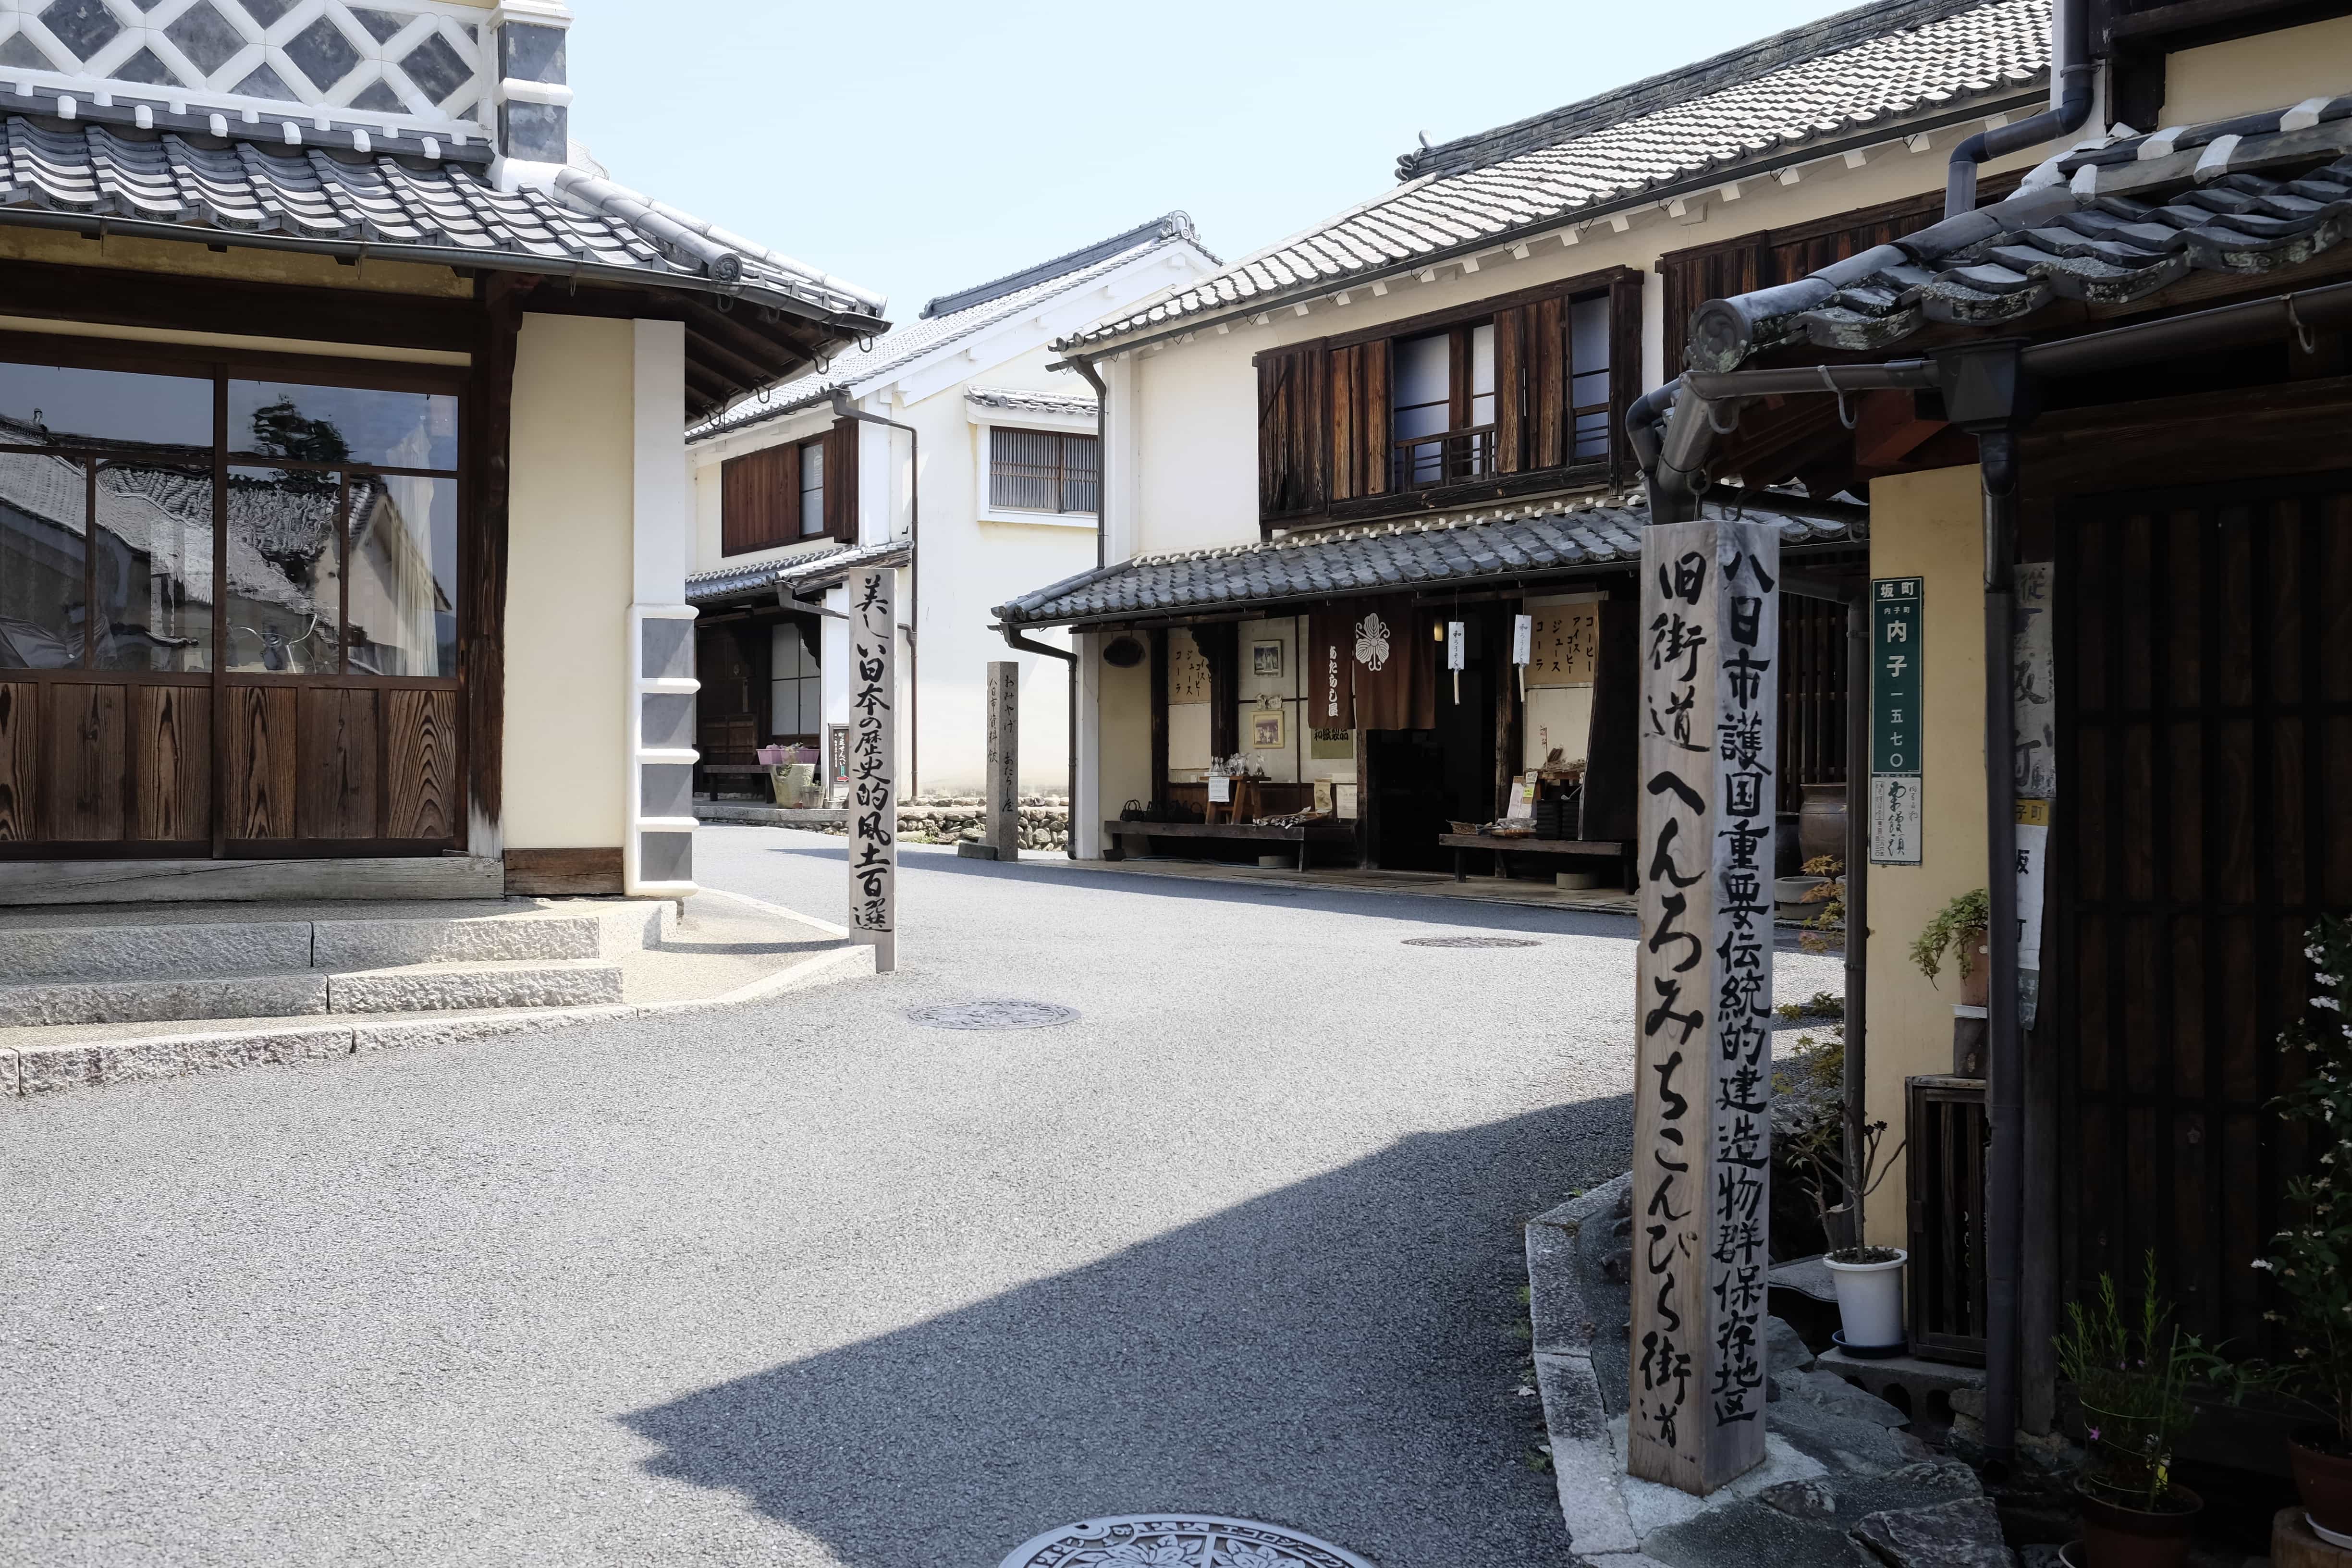 Yokaichi Old Town